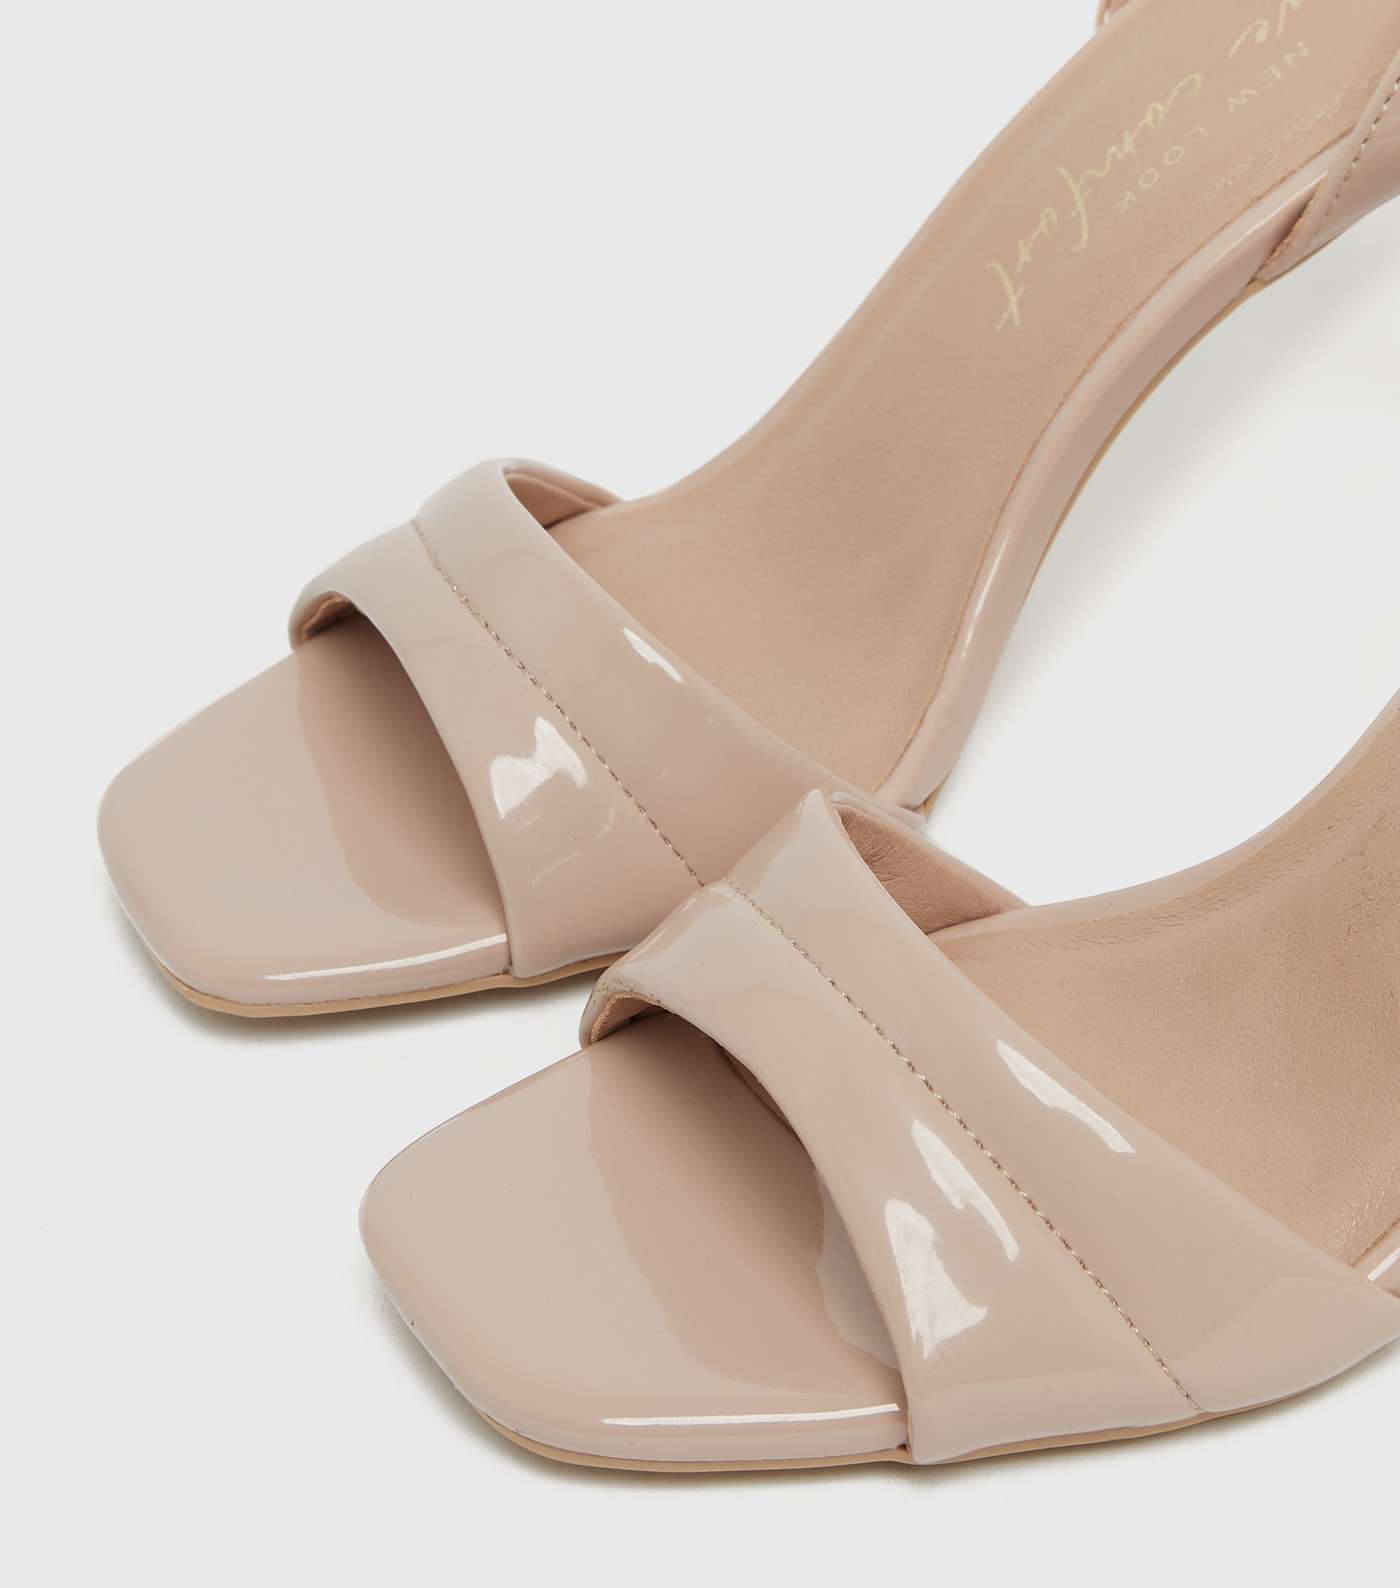 Cream Patent Padded Strap Stiletto Heel Sandals Image 3